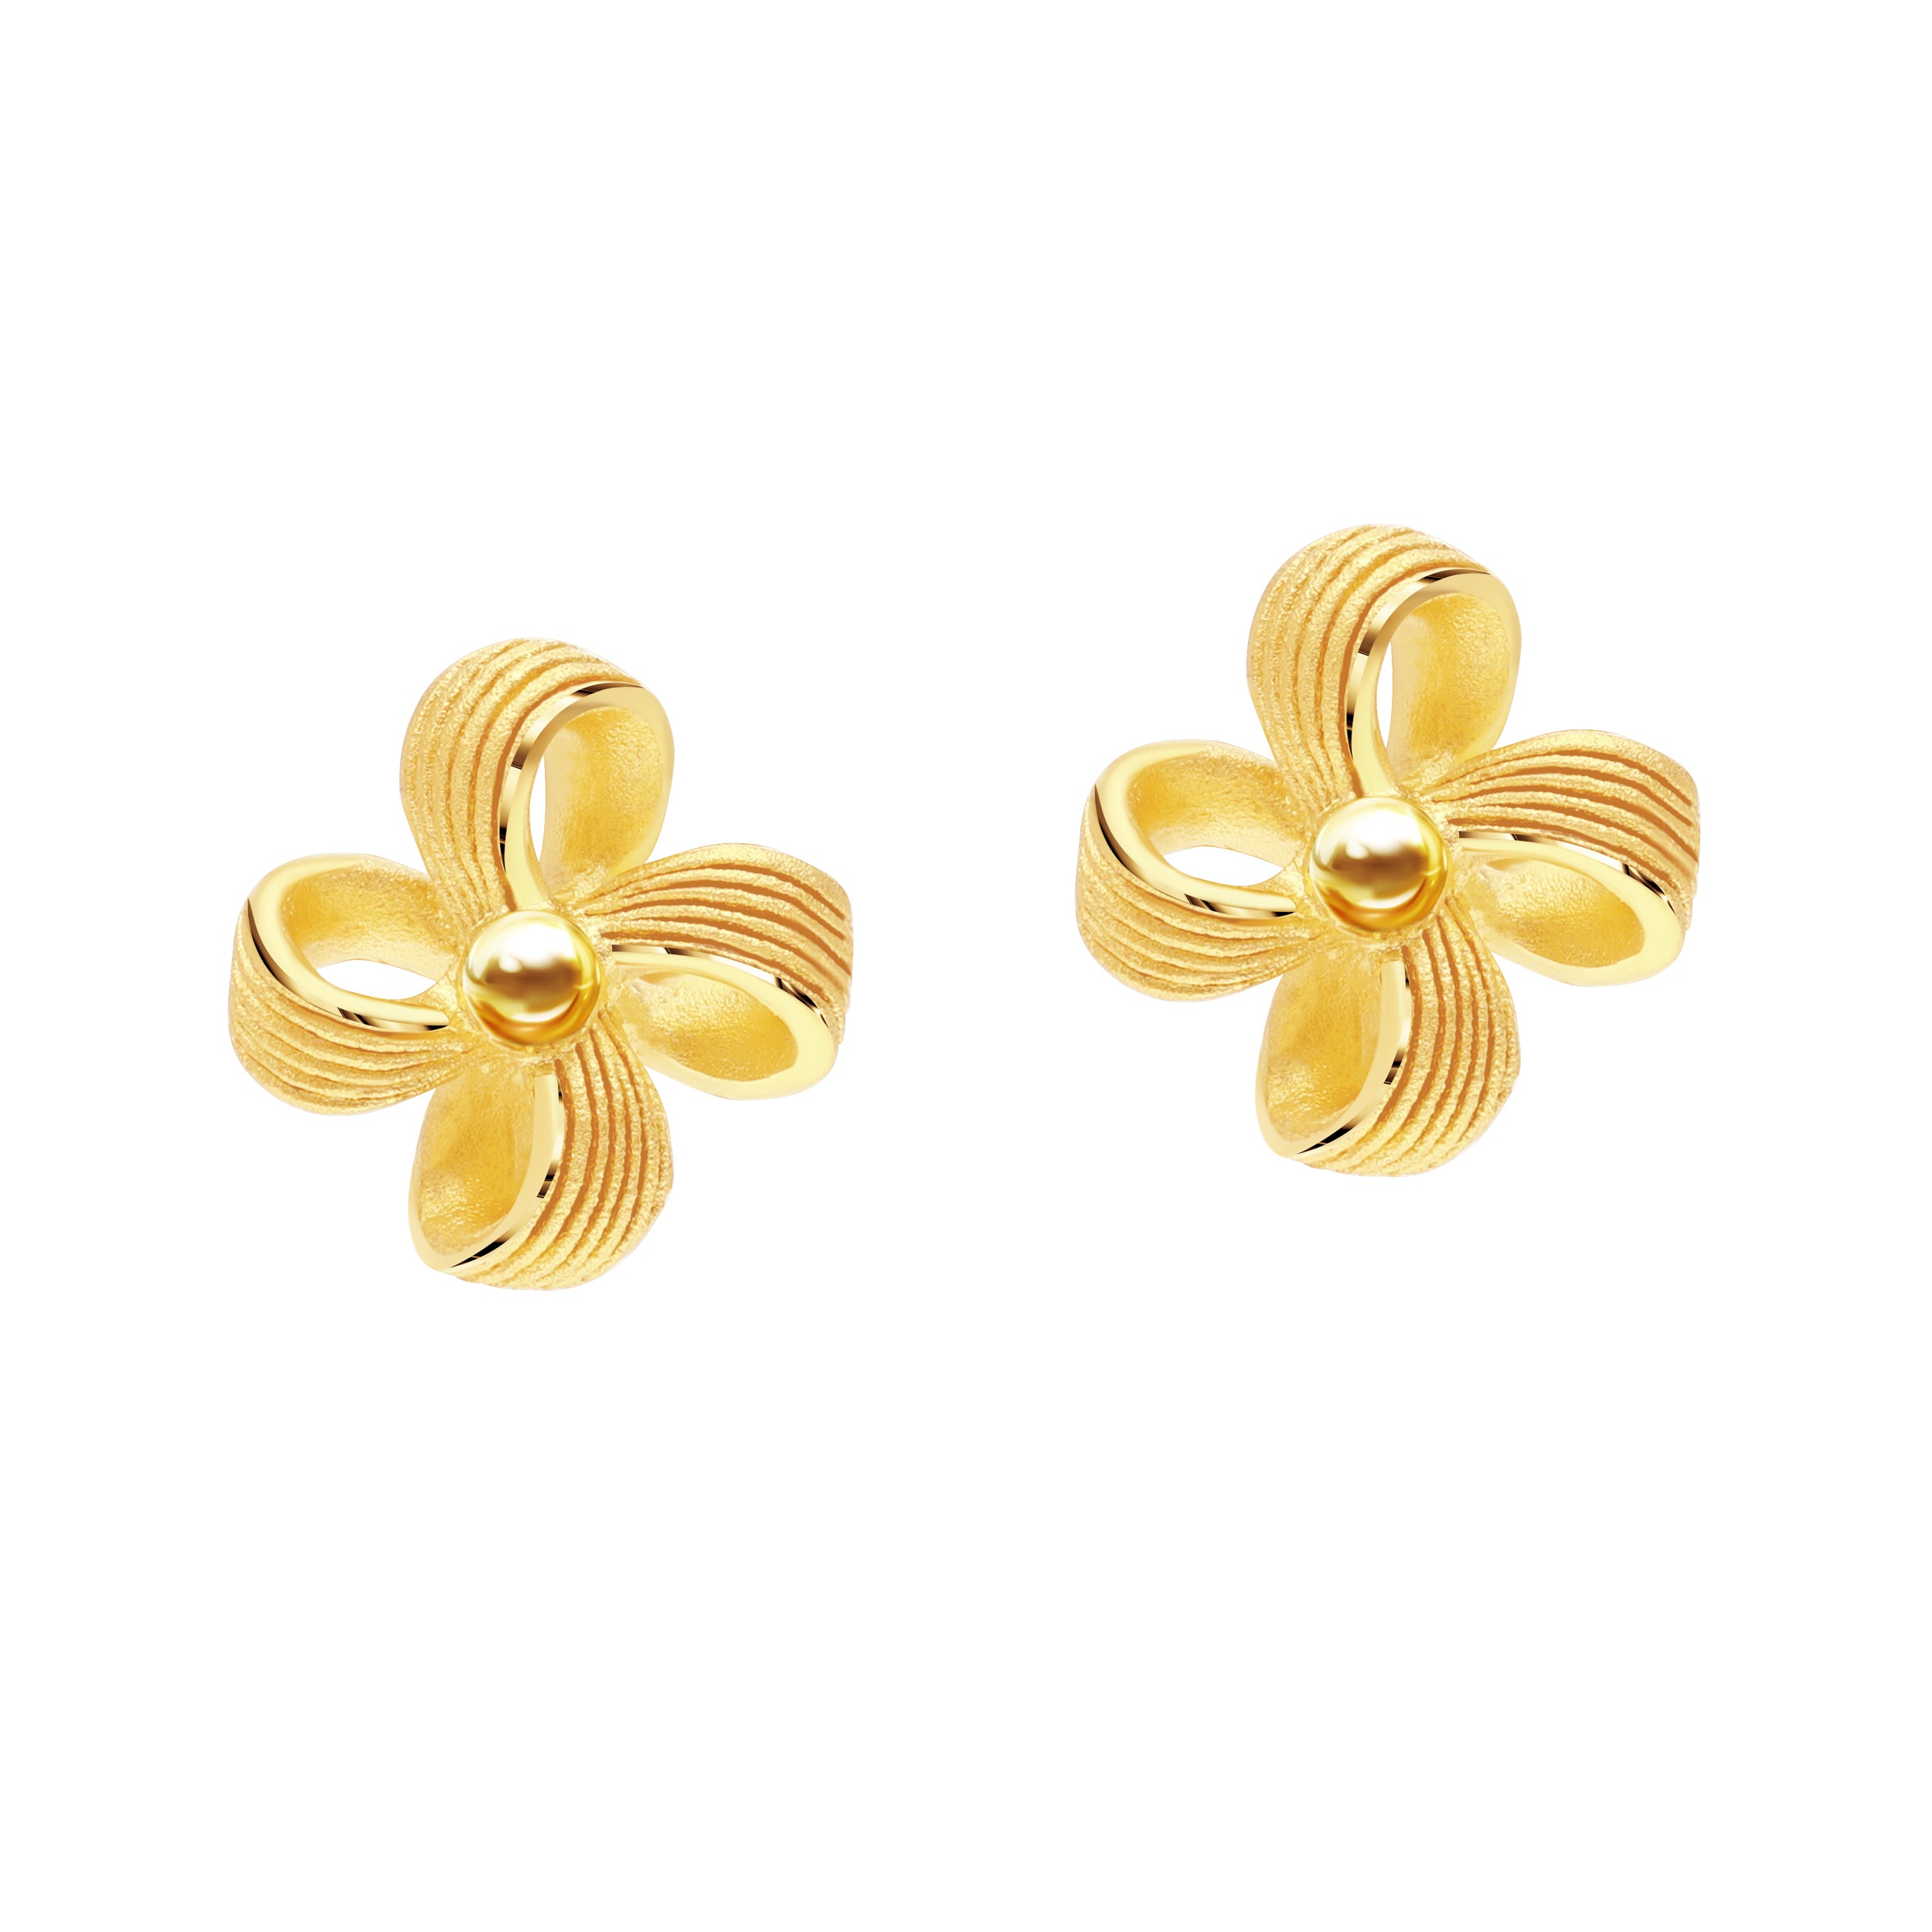 Buy One Gram Gold 3 Line Daily Wear Gold Earrings Designs